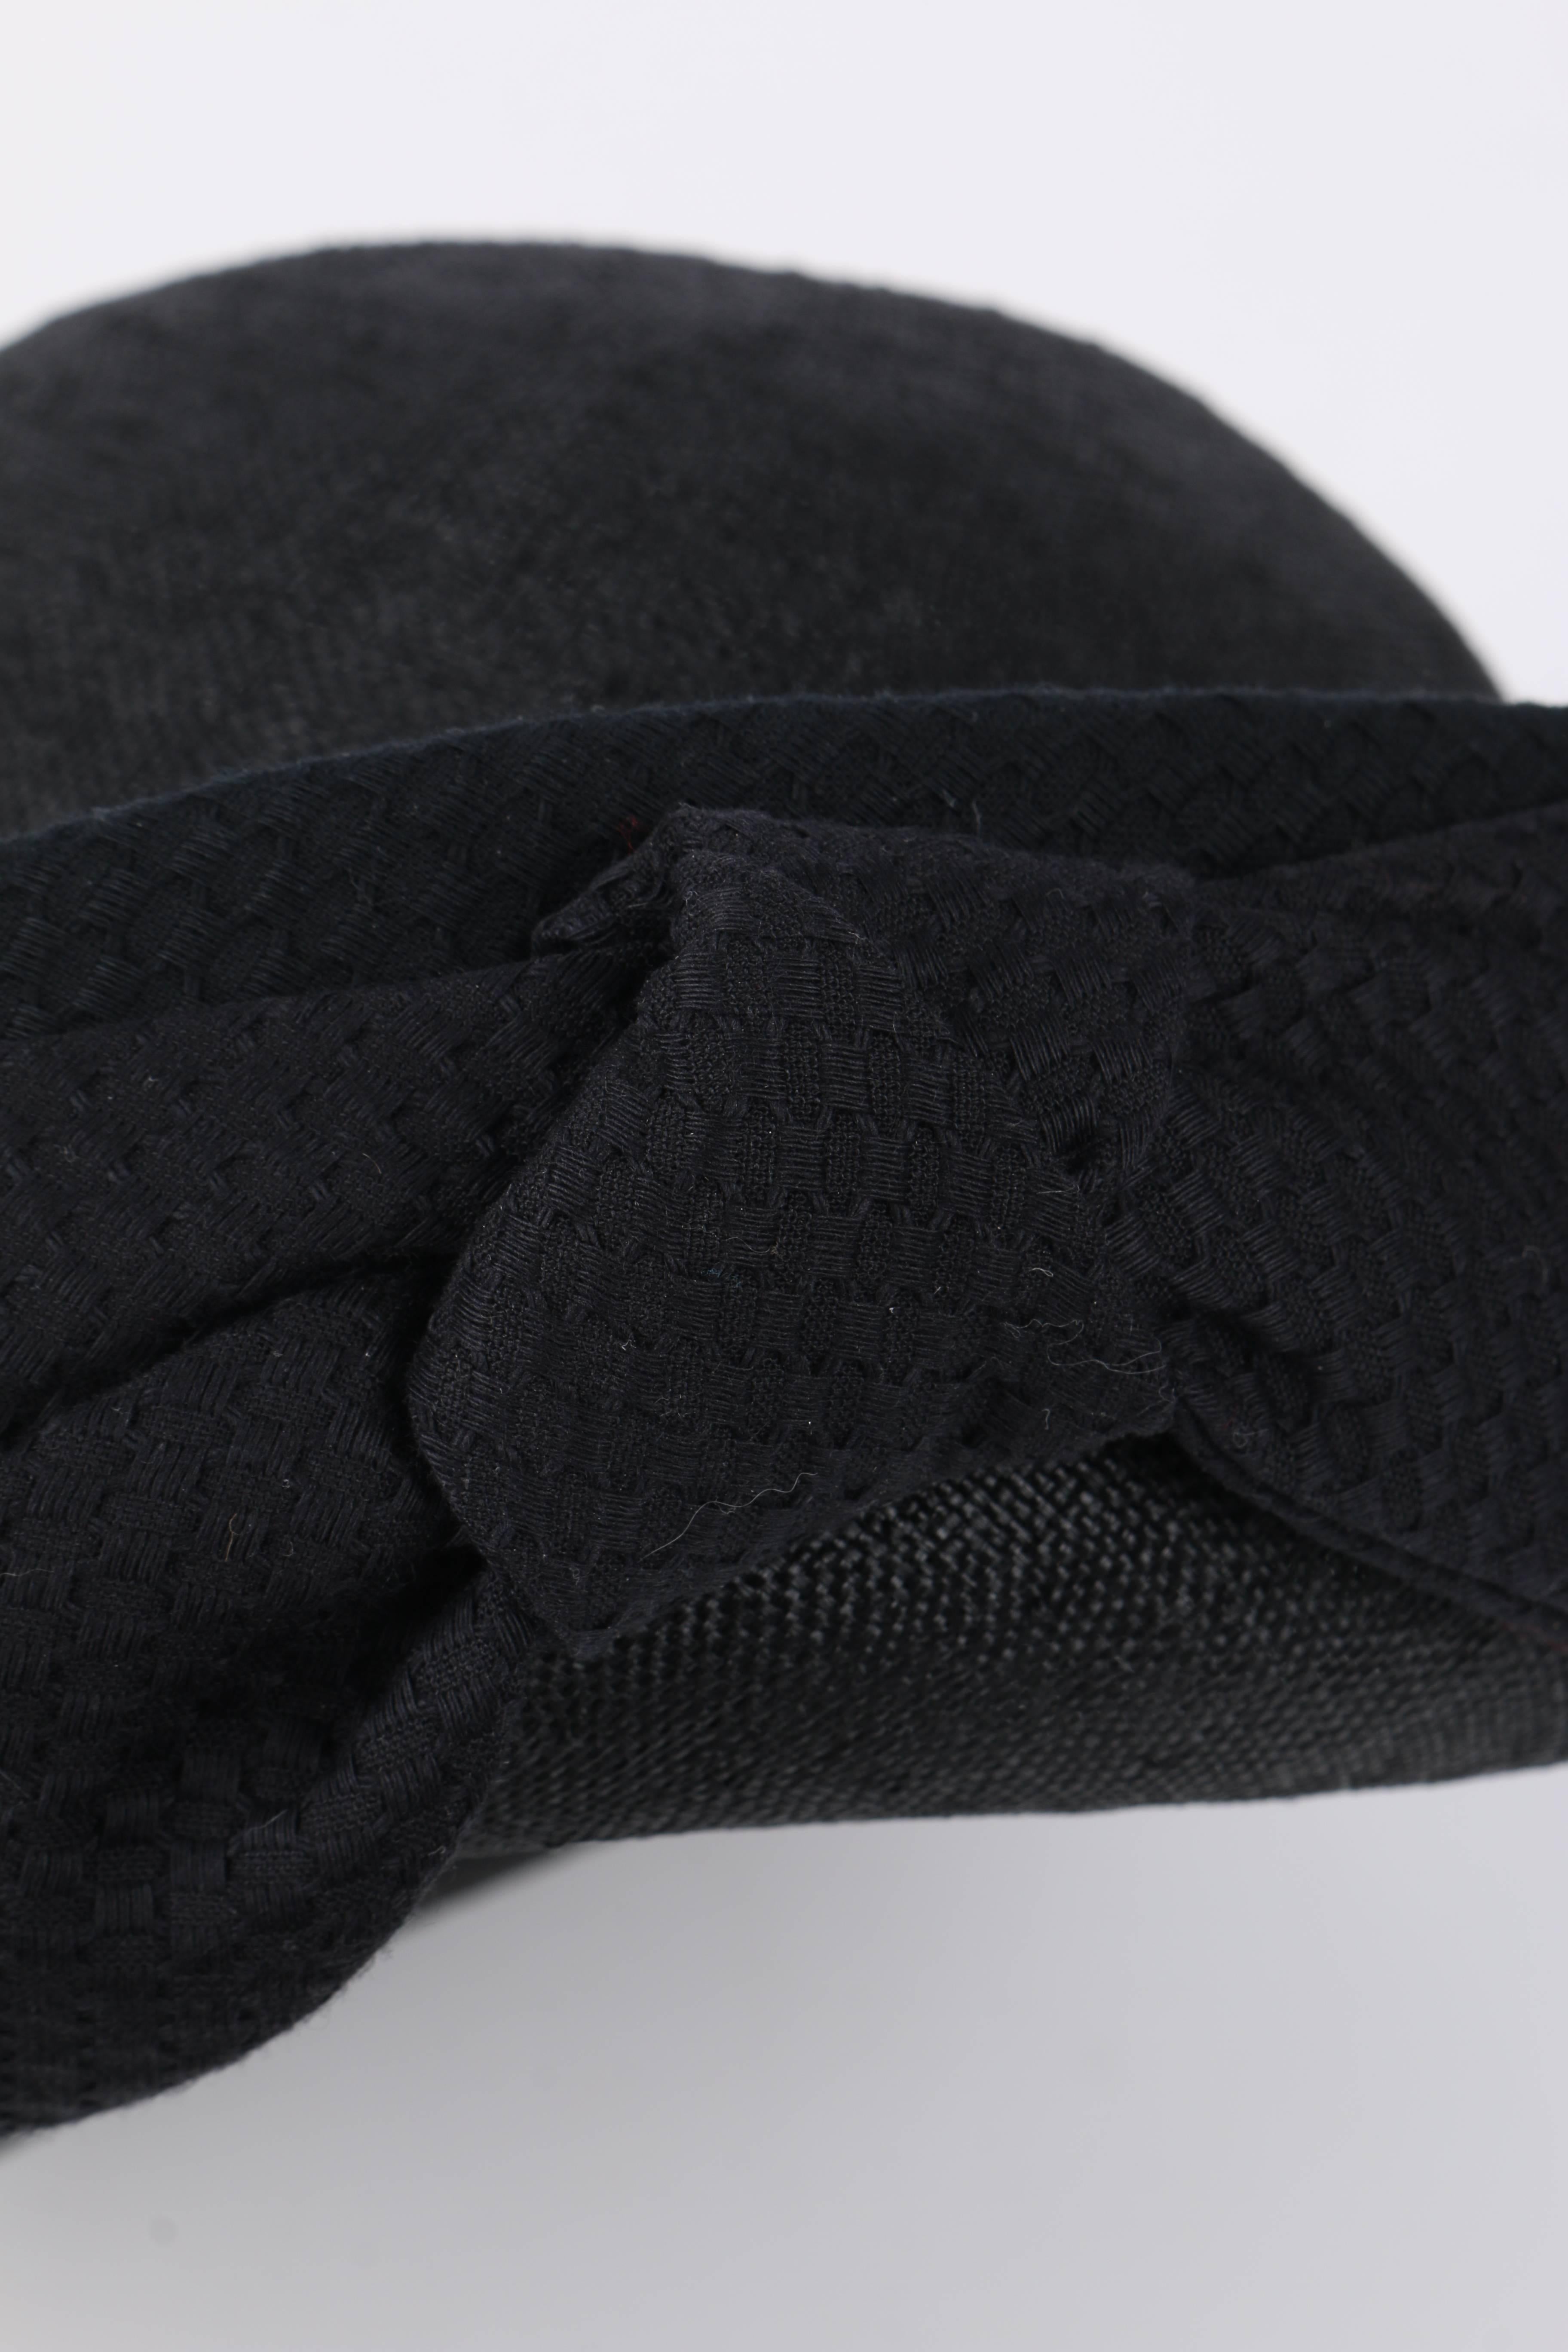 OSCAR DE LA RENTA Millinery Black Woven Straw Cotton Bow Vegabond Hat  3